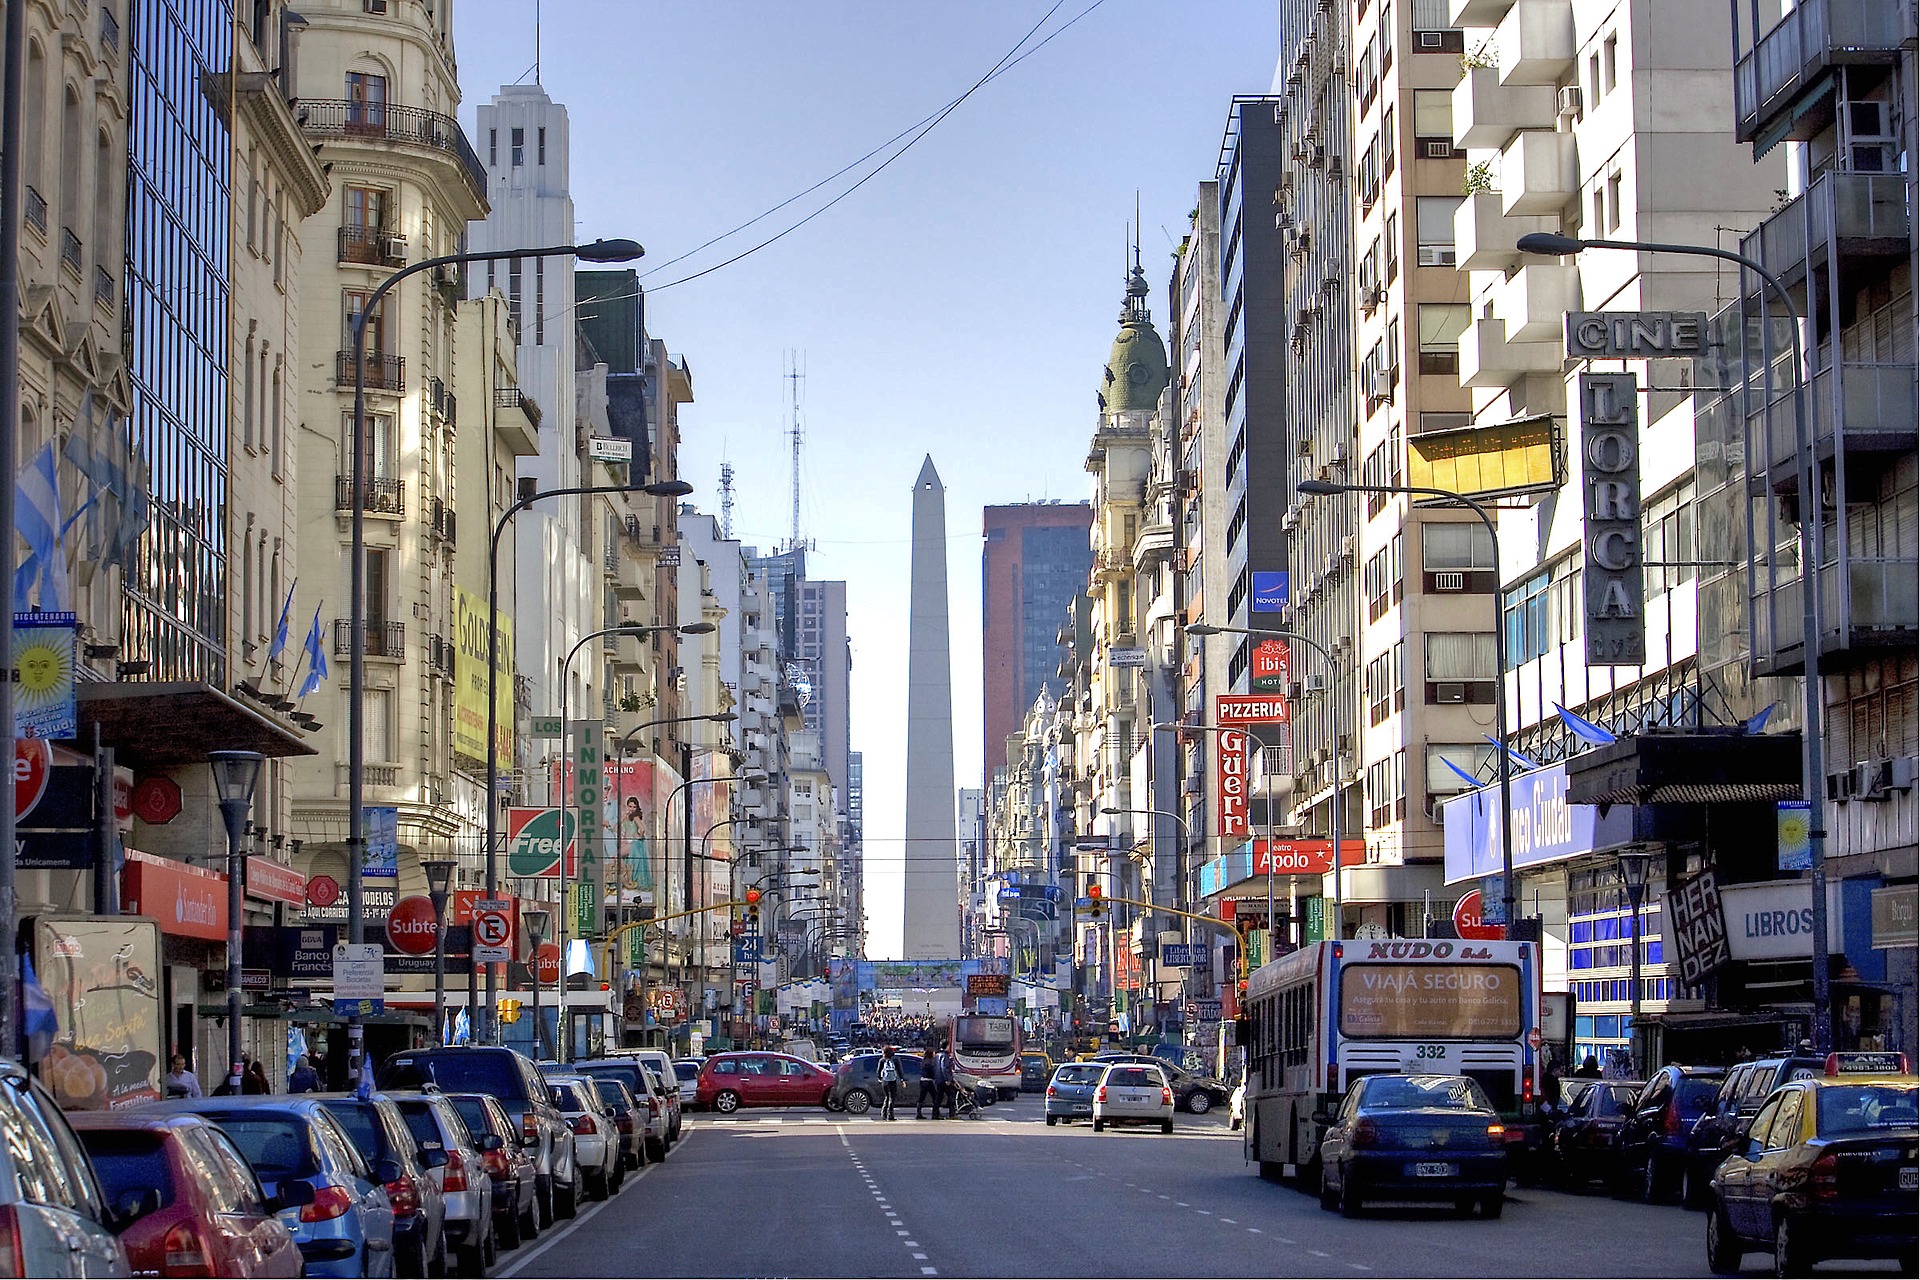 Buenos Aires square